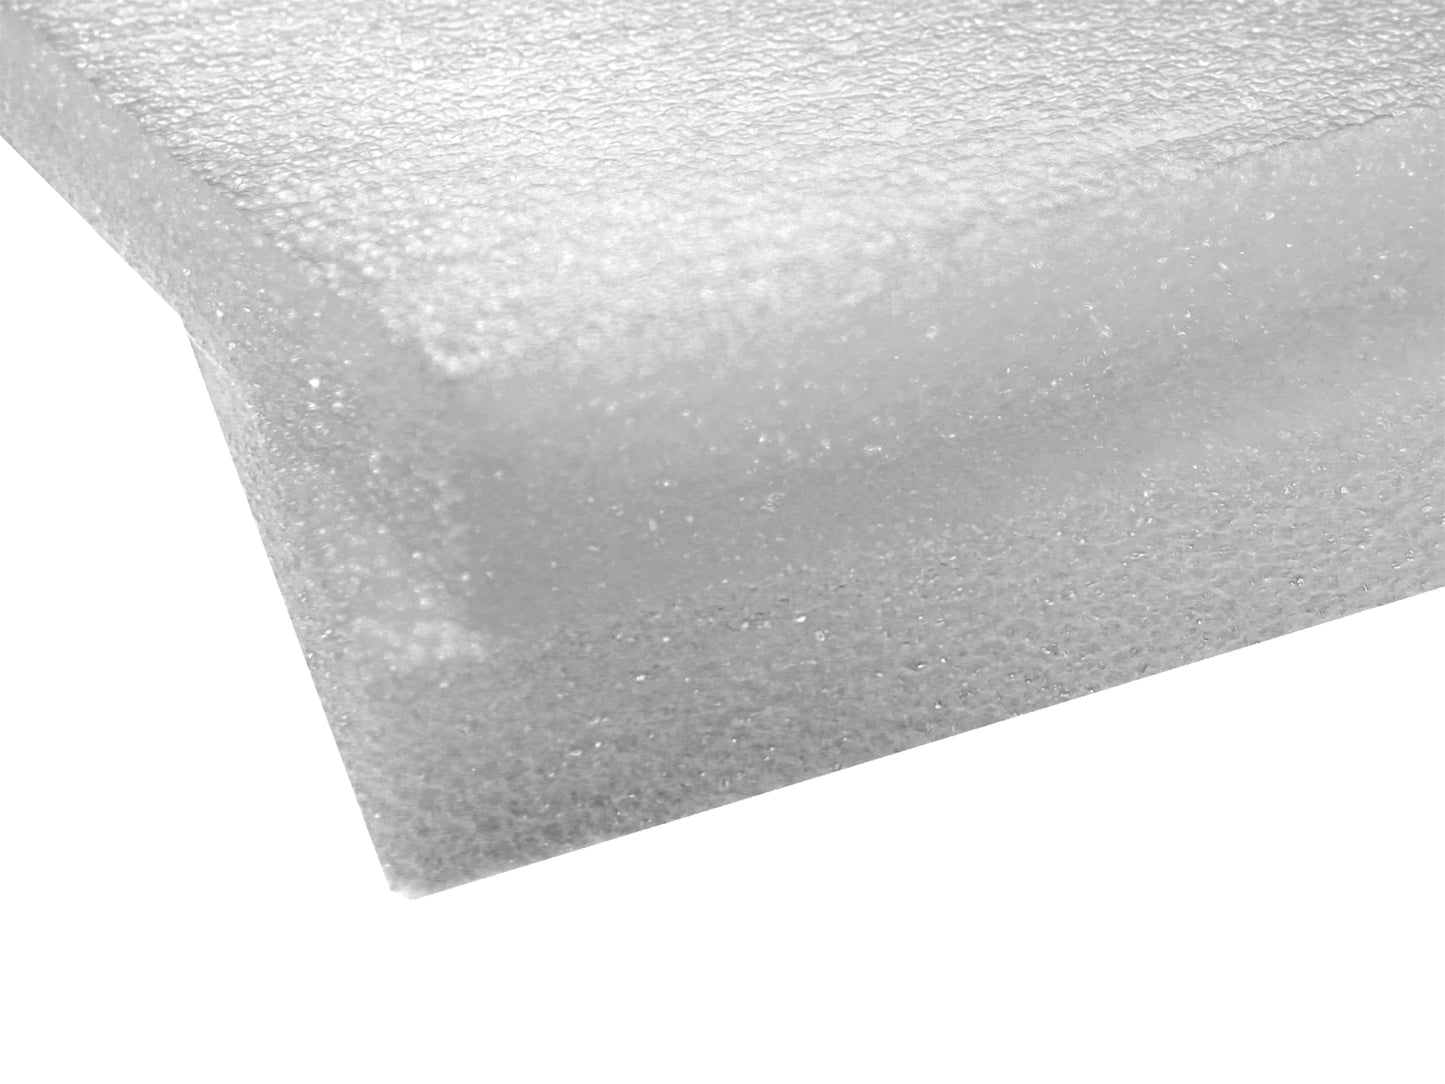 Polyethylene Foam, Roll, Tubes, Polyethylene Closed Cell Foam Sheets